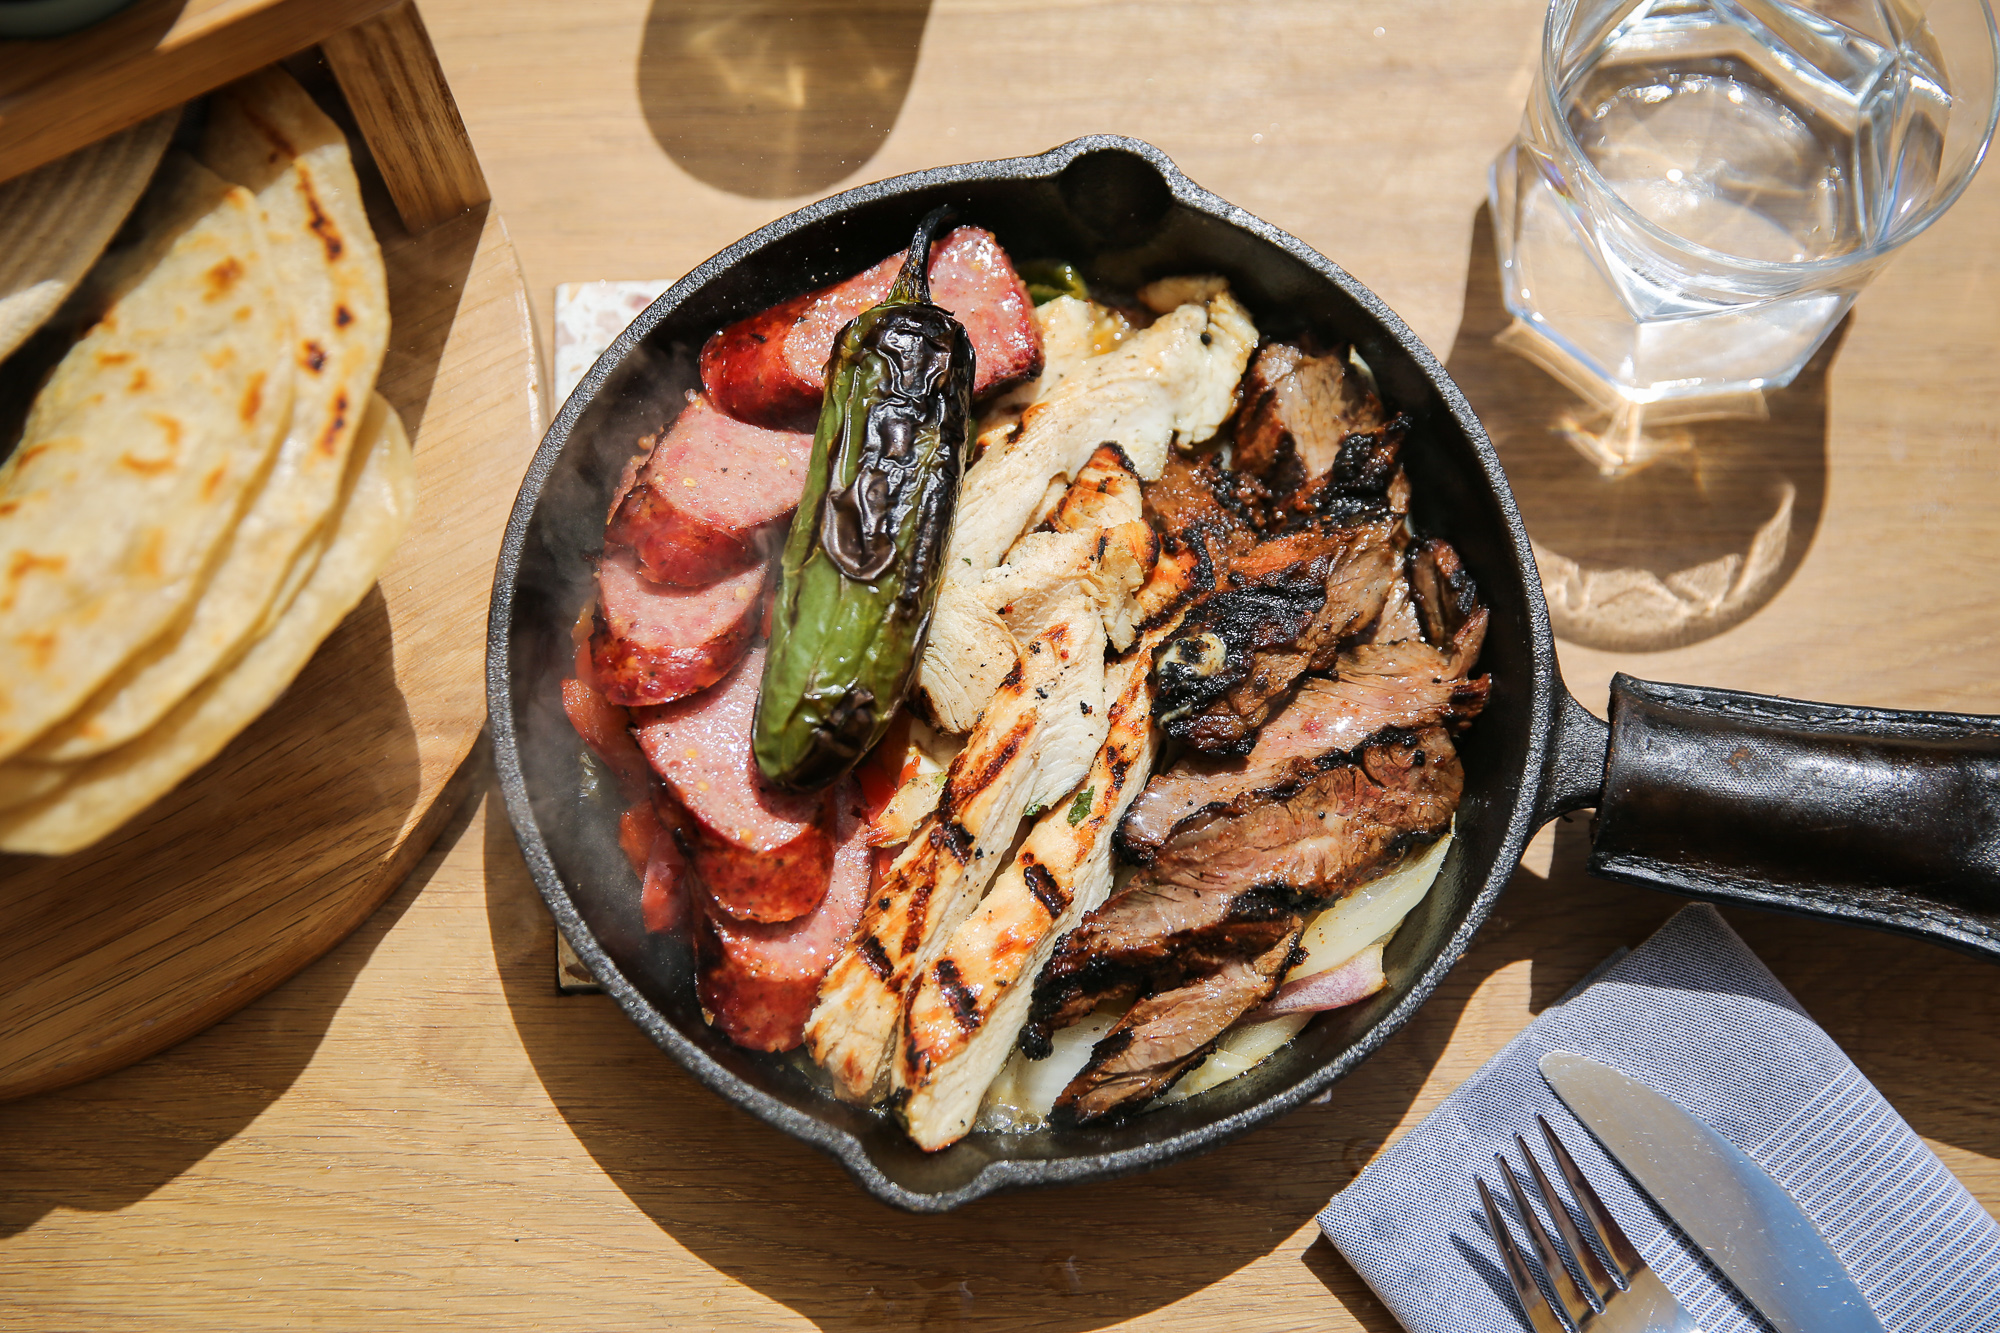 Republic Cantina’s “pick 3” fajita platter with brisket Czech sausage, chicken, and gochujang-marinated skirt steak